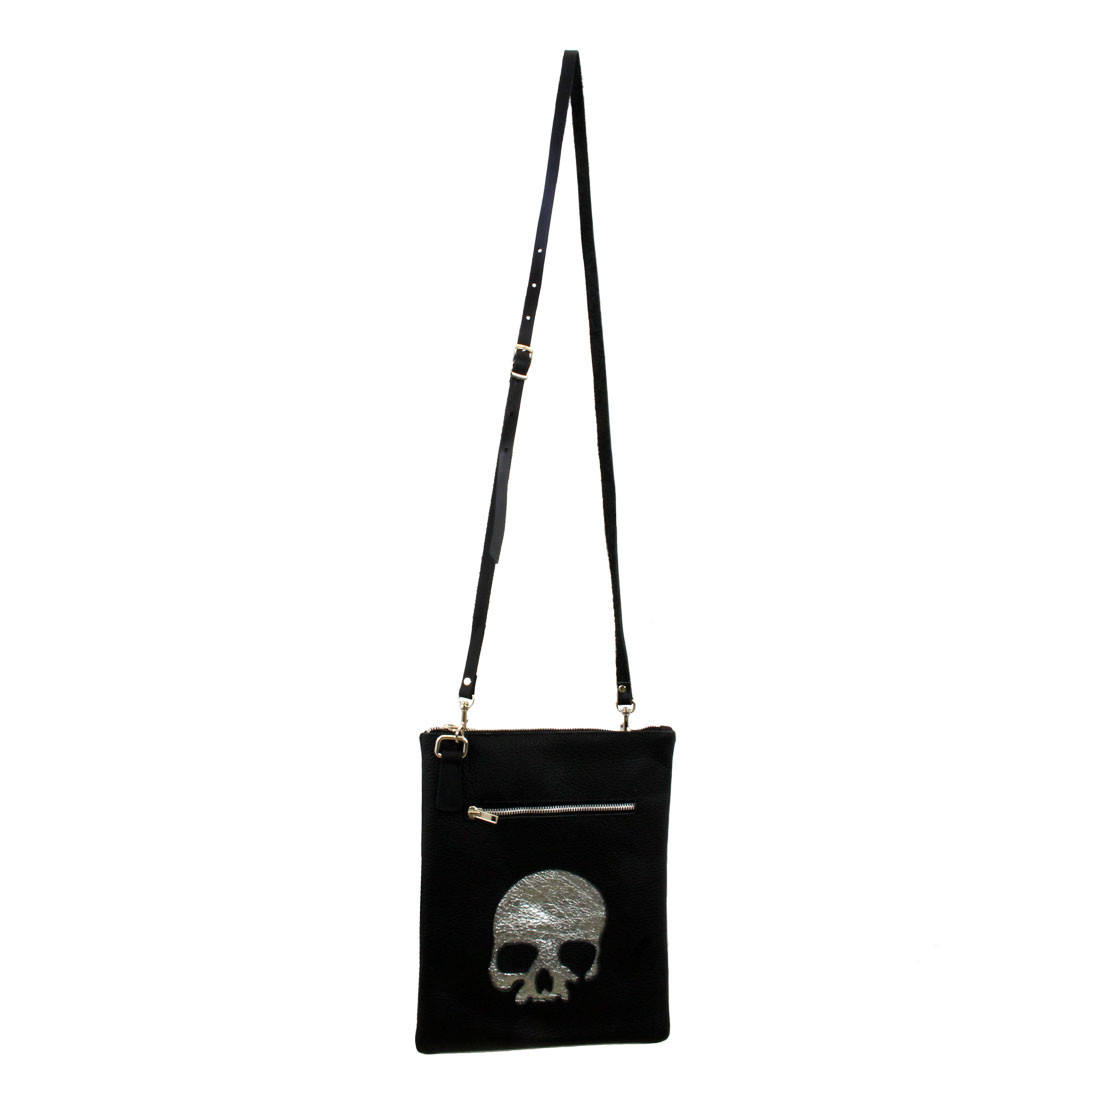 Black Leather Shoulder Bag Purse with Silver Skull on front. 